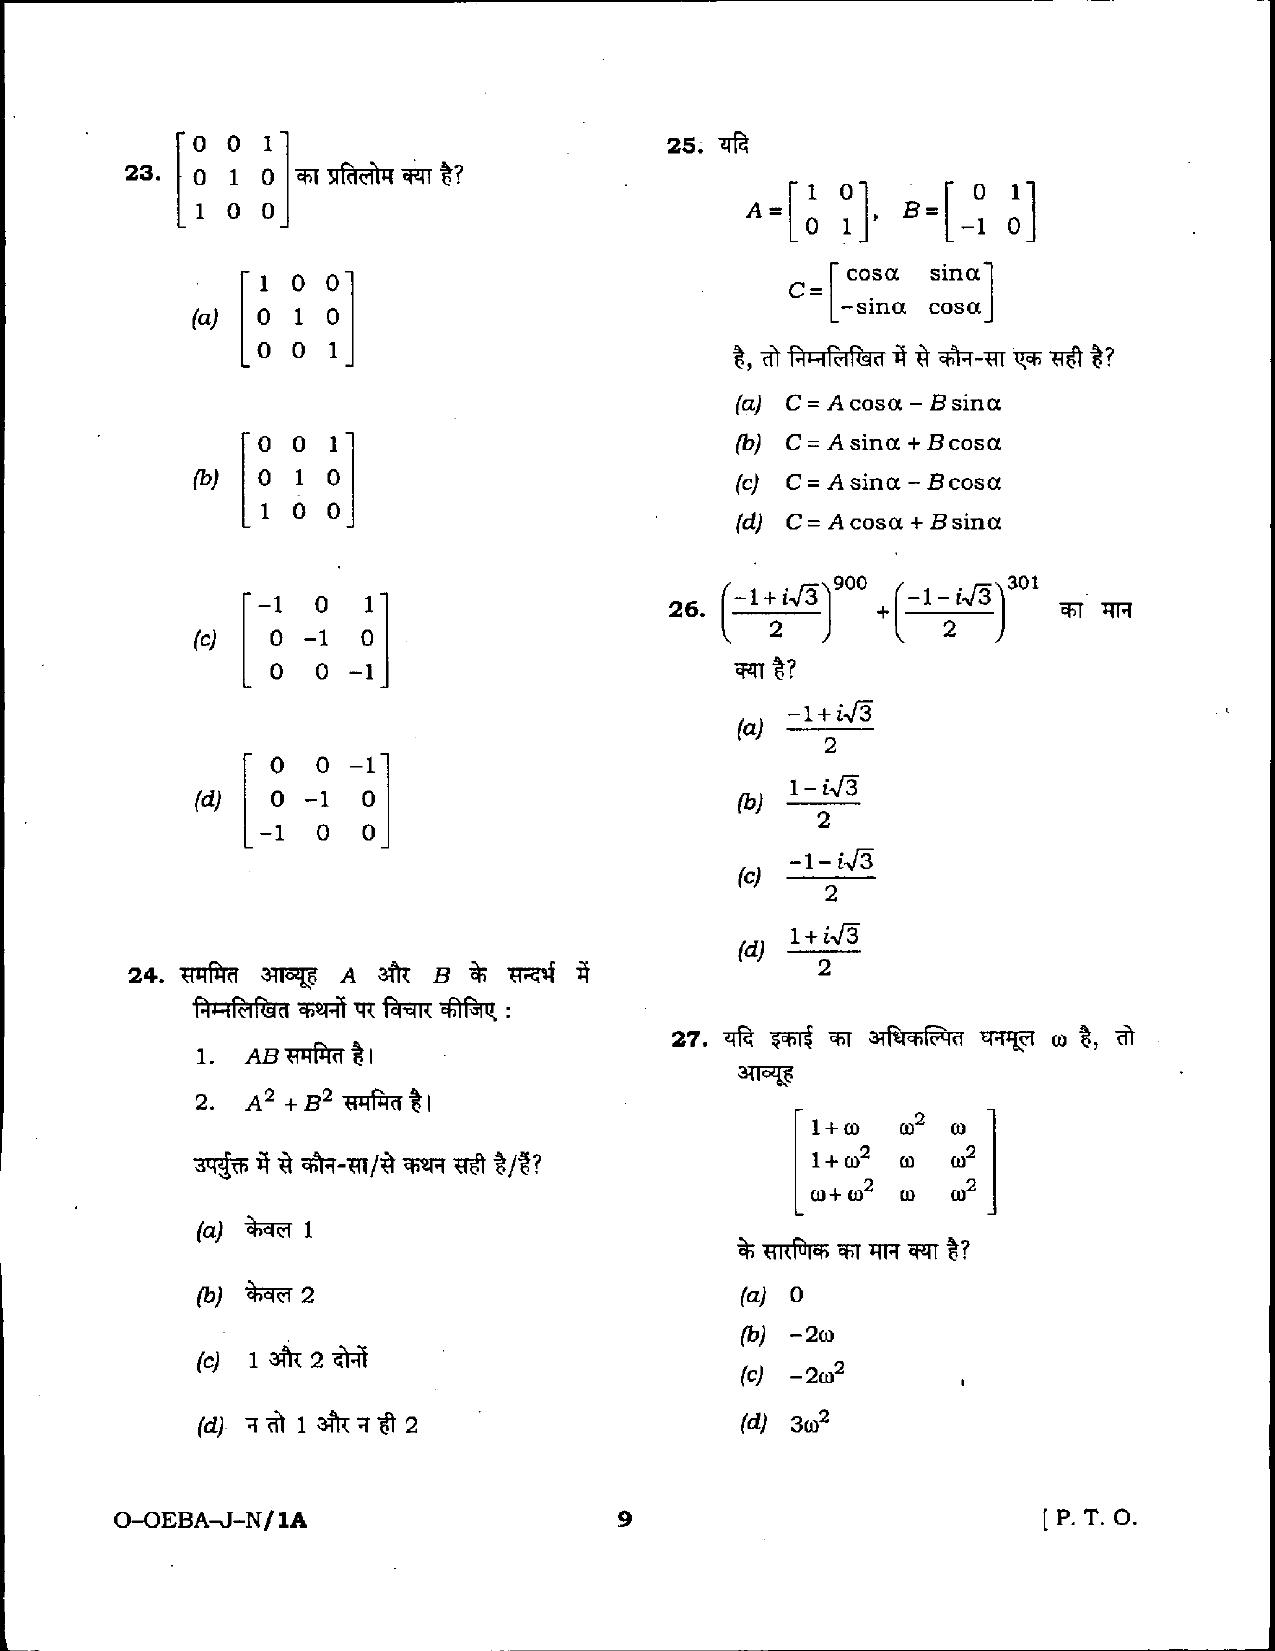 Odisha Junior Clerk Question Paper - General Mathematics - Page 9